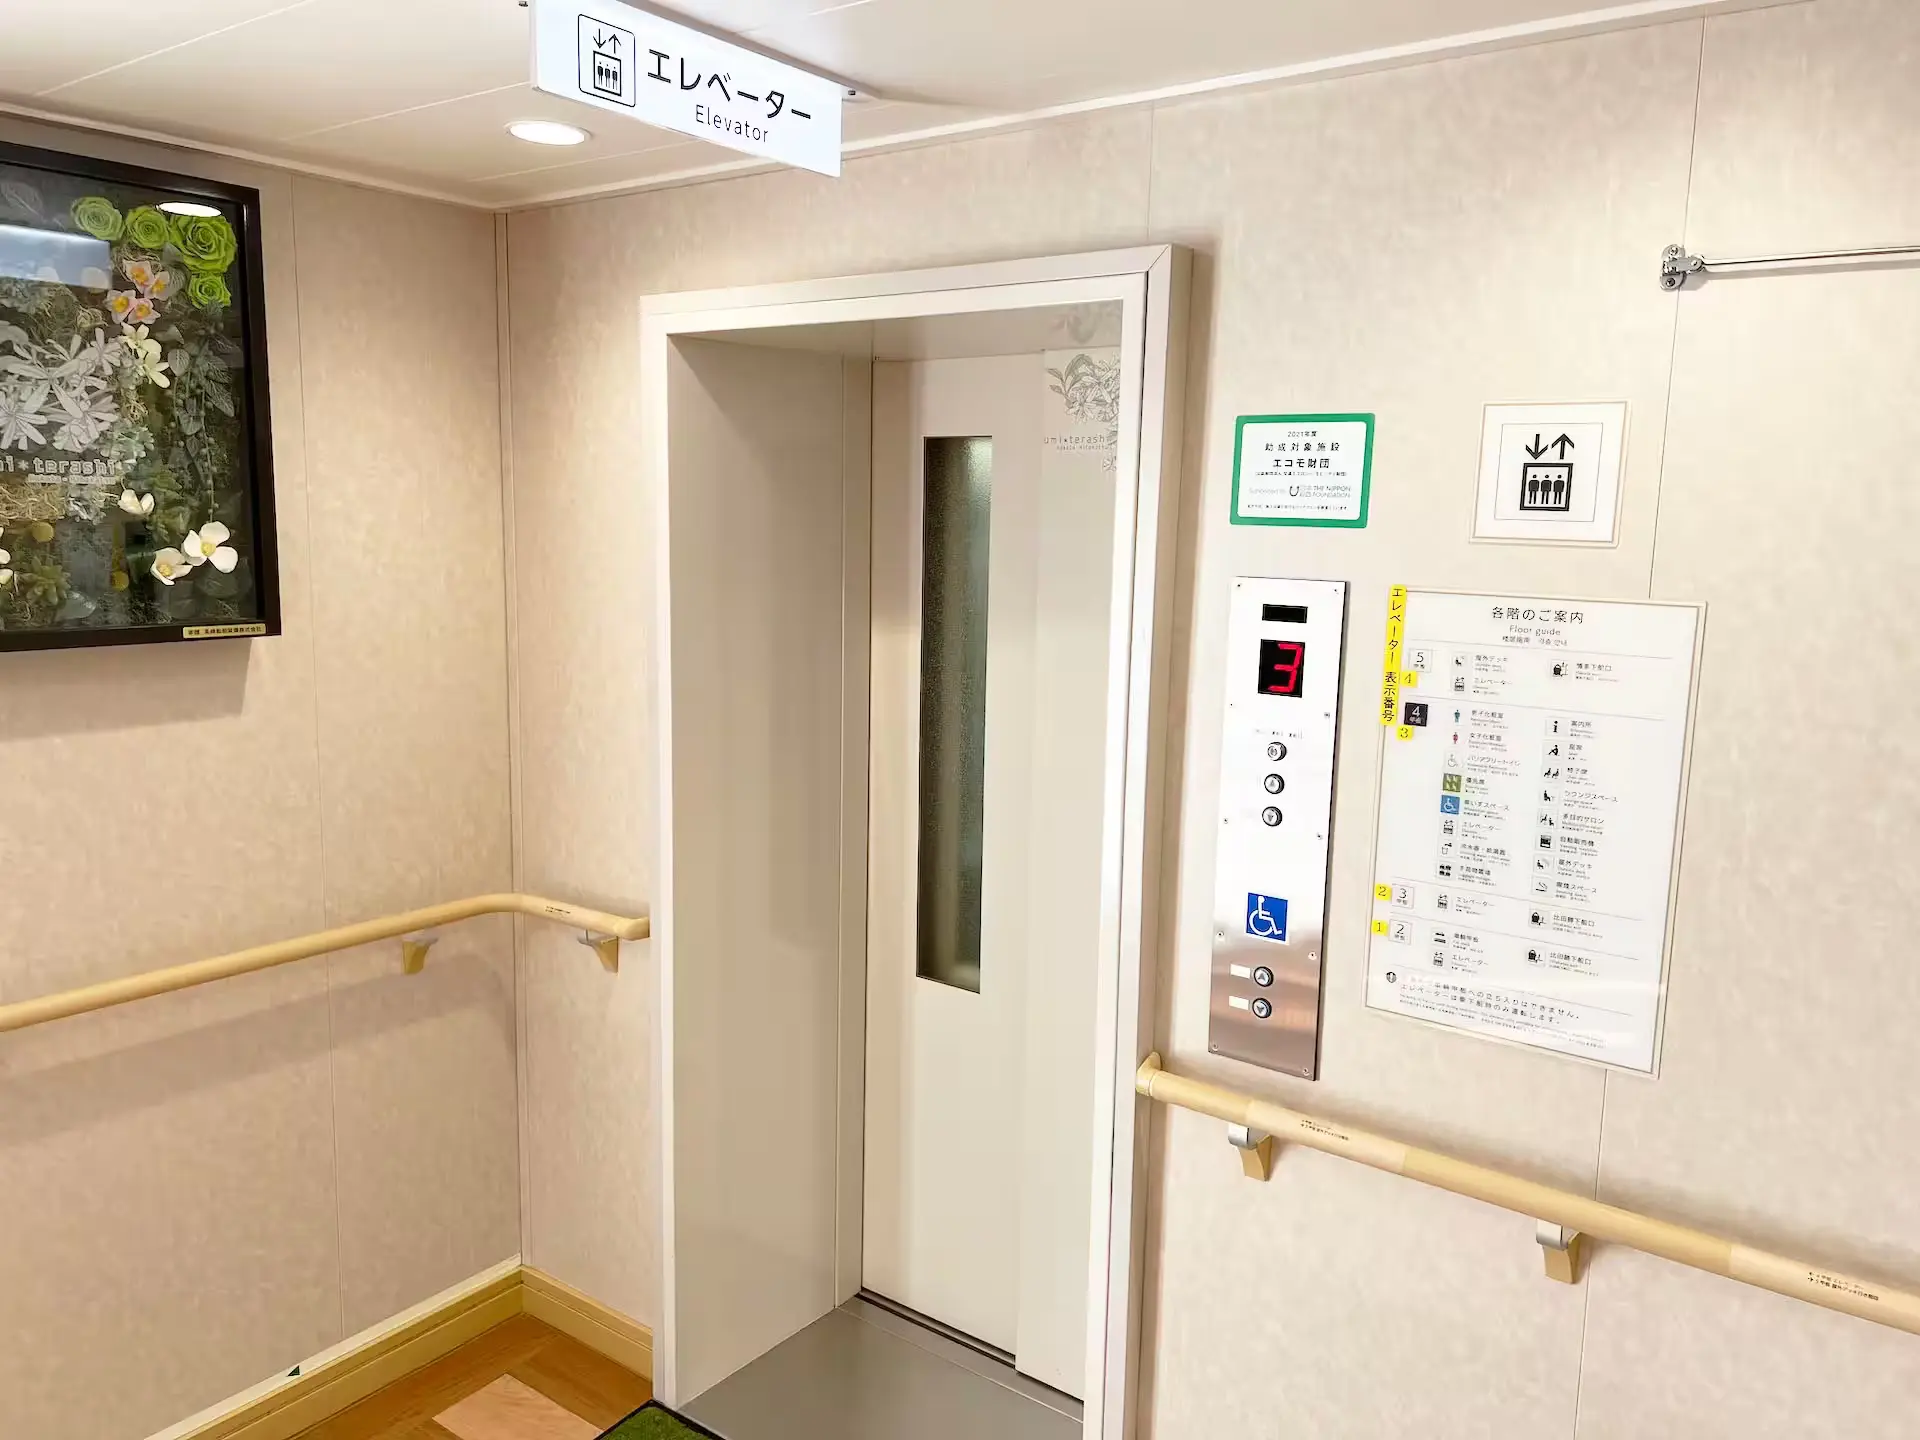 Elevator on board the Kyushu Yusen Umiterashi